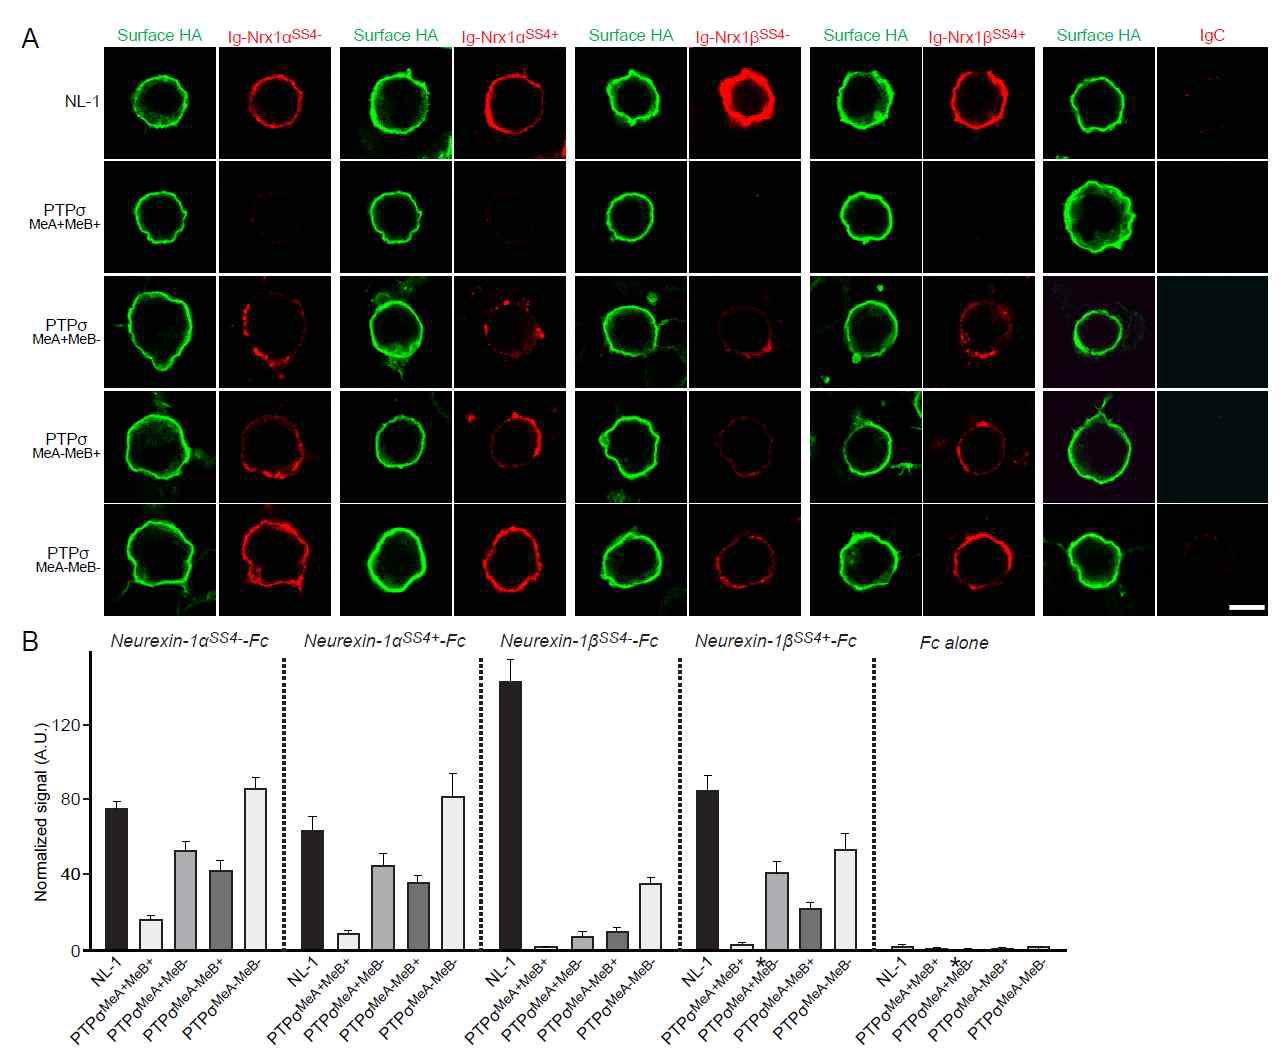 PTPσ 단백질과 neurexin 단백질의 직접적 상호작용: cell surface binding 실험을 통해 neurexin 재조합 단백질을 LAR-RPTP 발현된 세포에 처리했을 경우 강한 친화도 상호작용을 관찰하였음 (reported in Han et al. 2020 J Neurosci)